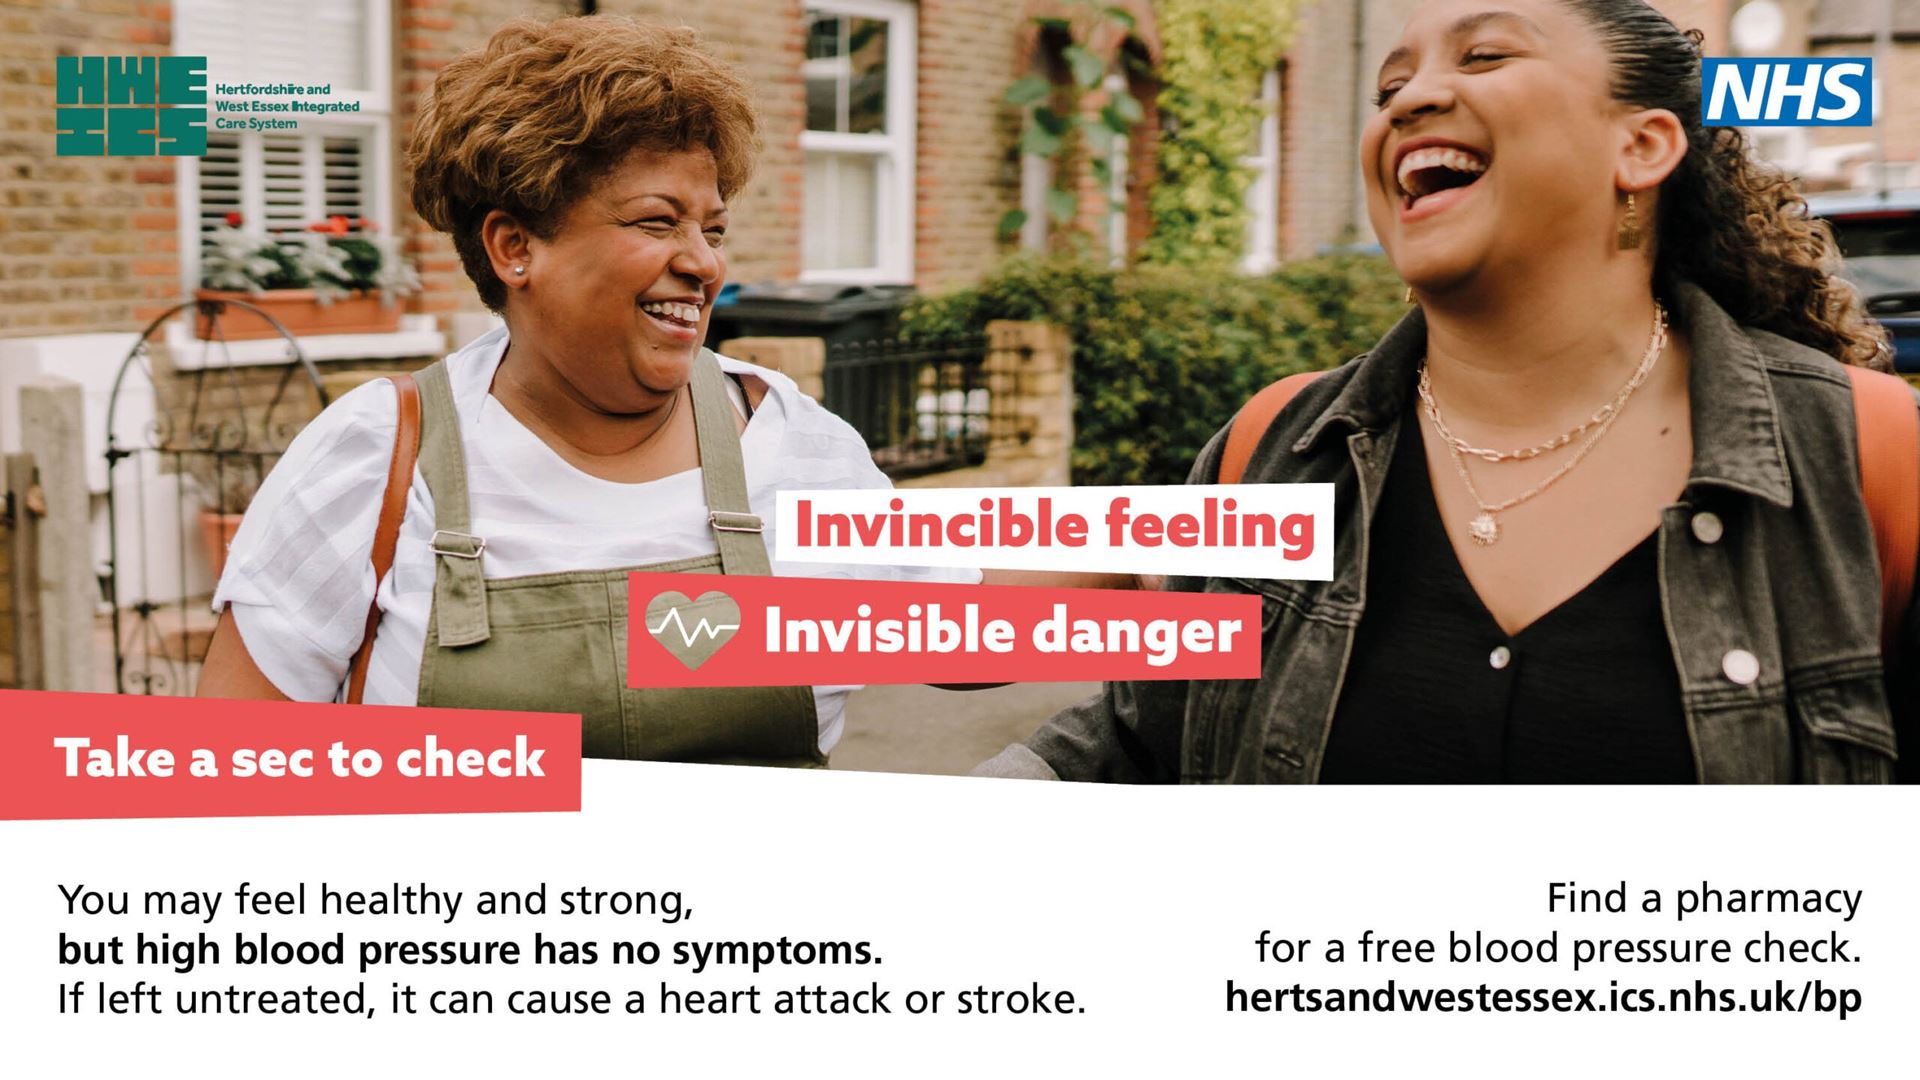 Invincible Feeling, invisible Danger – take a sec to check